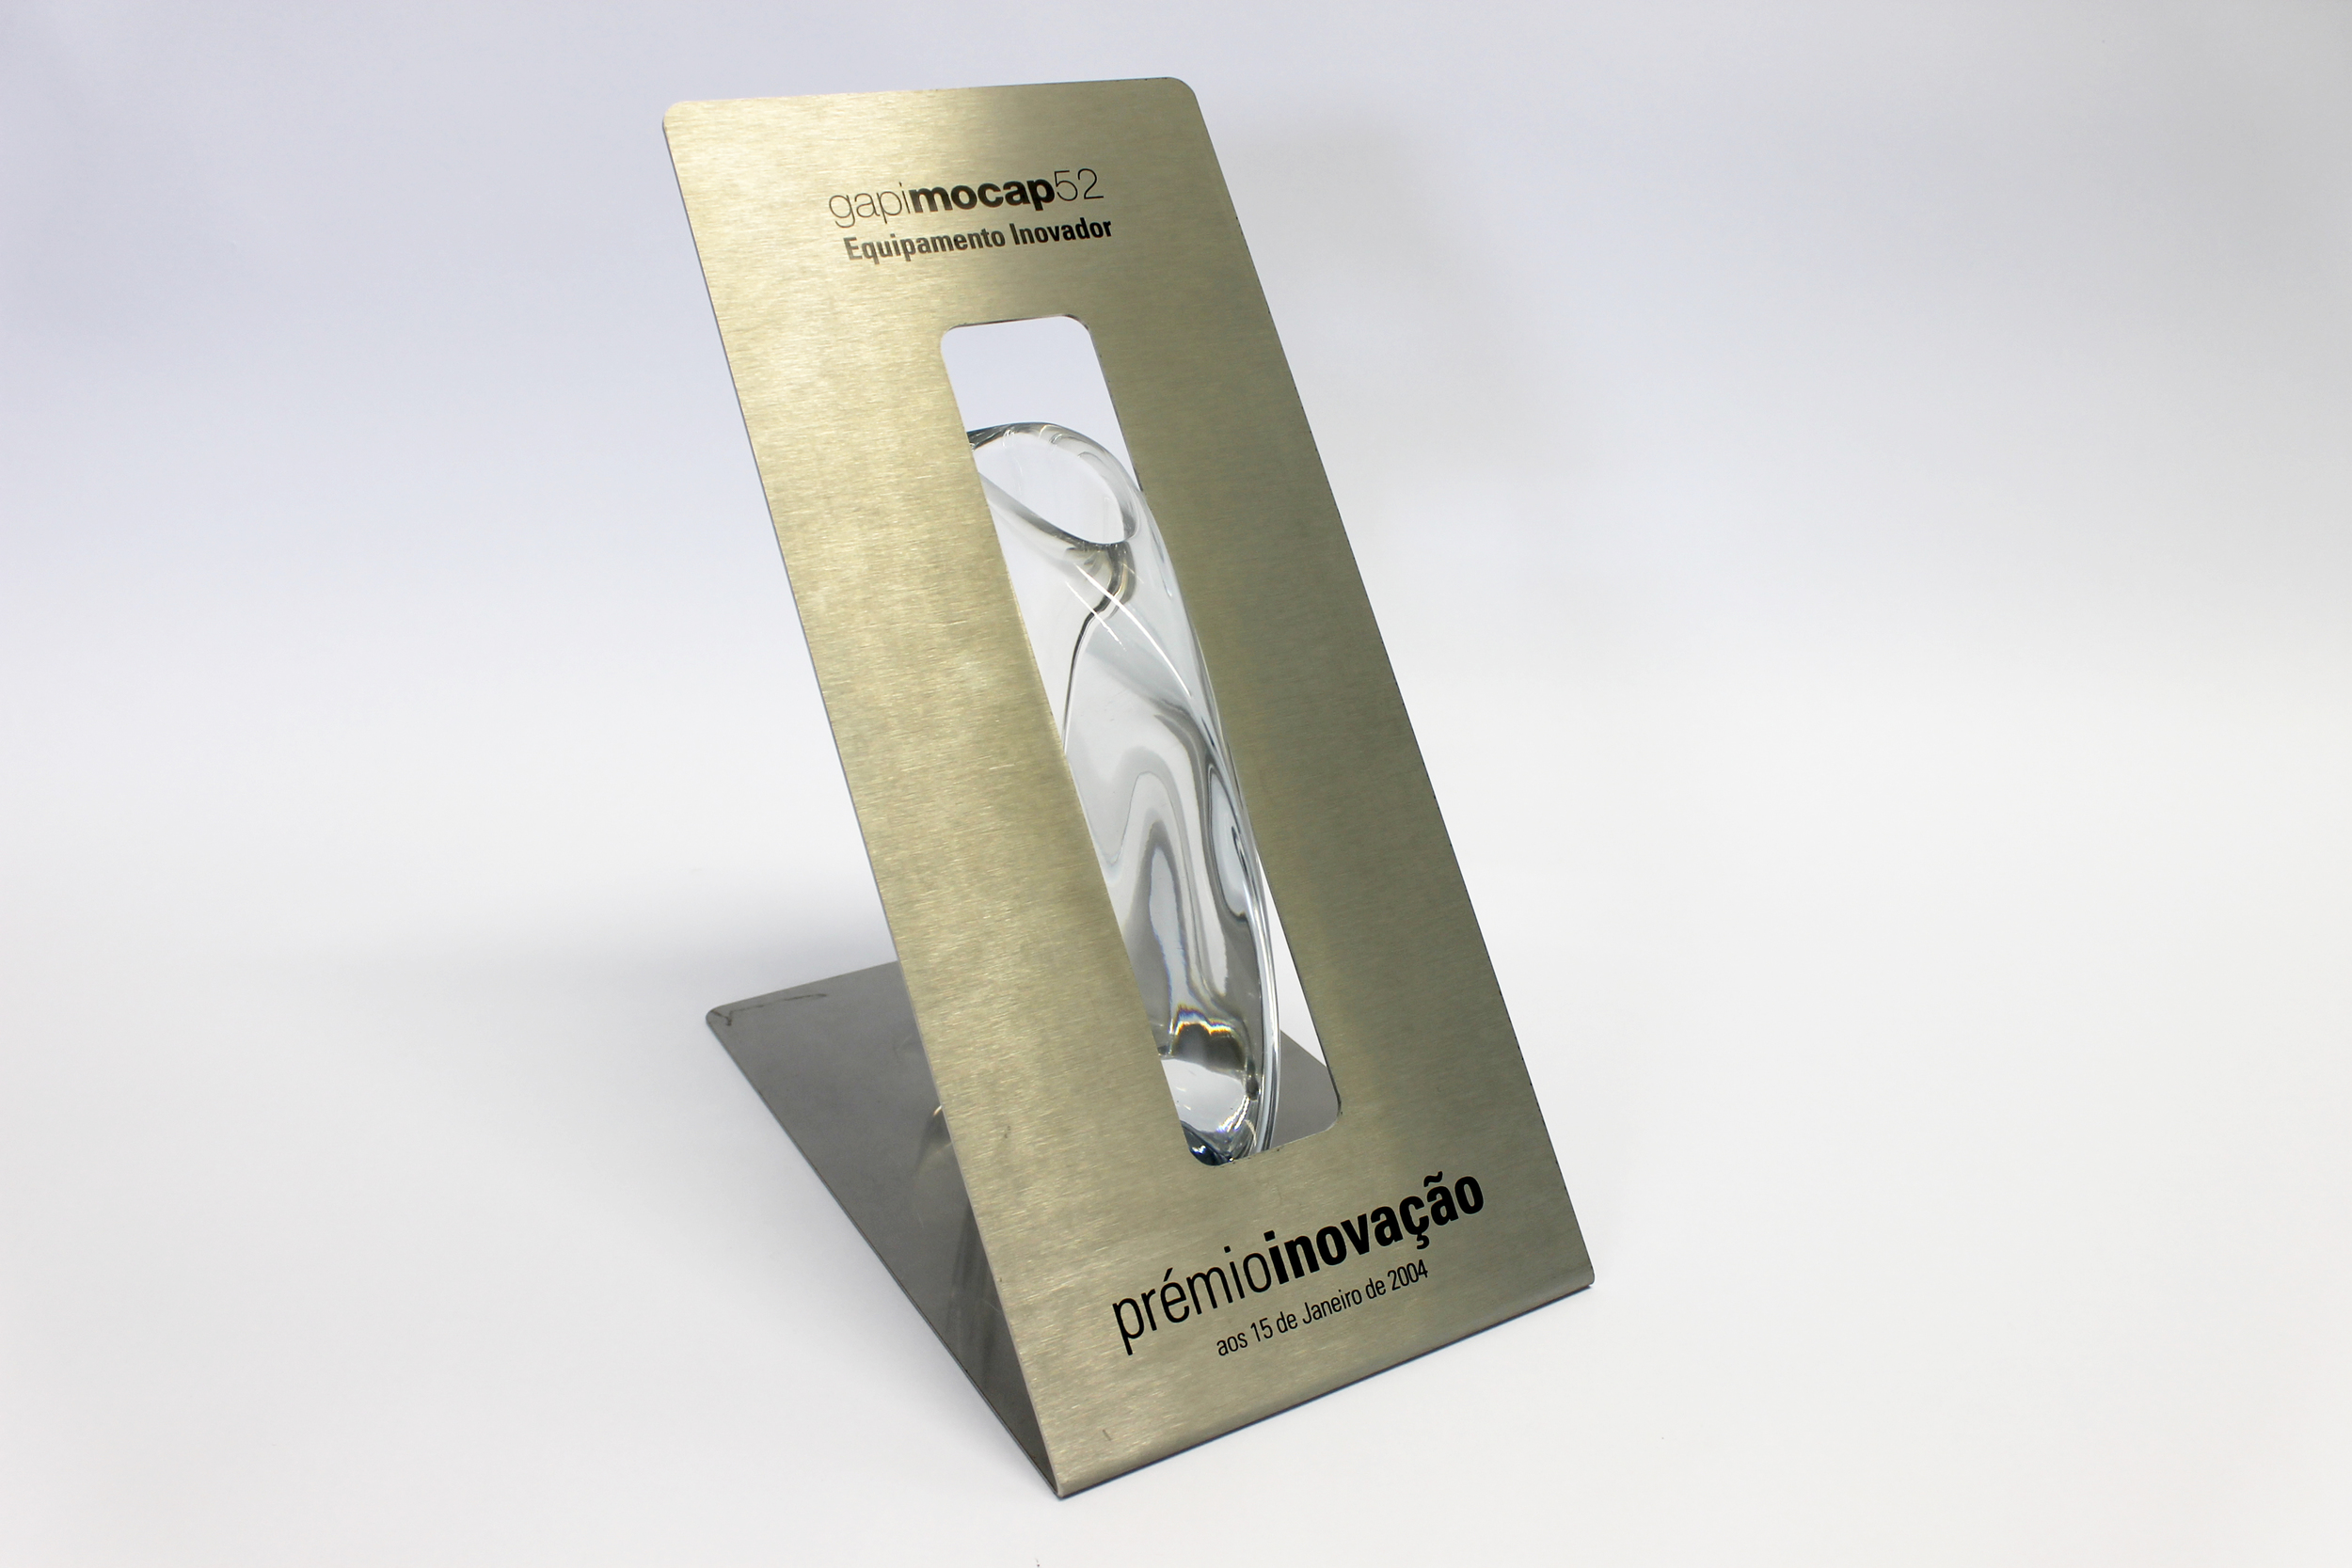 2004 - Technological Innovation Award (Gapimocap52)